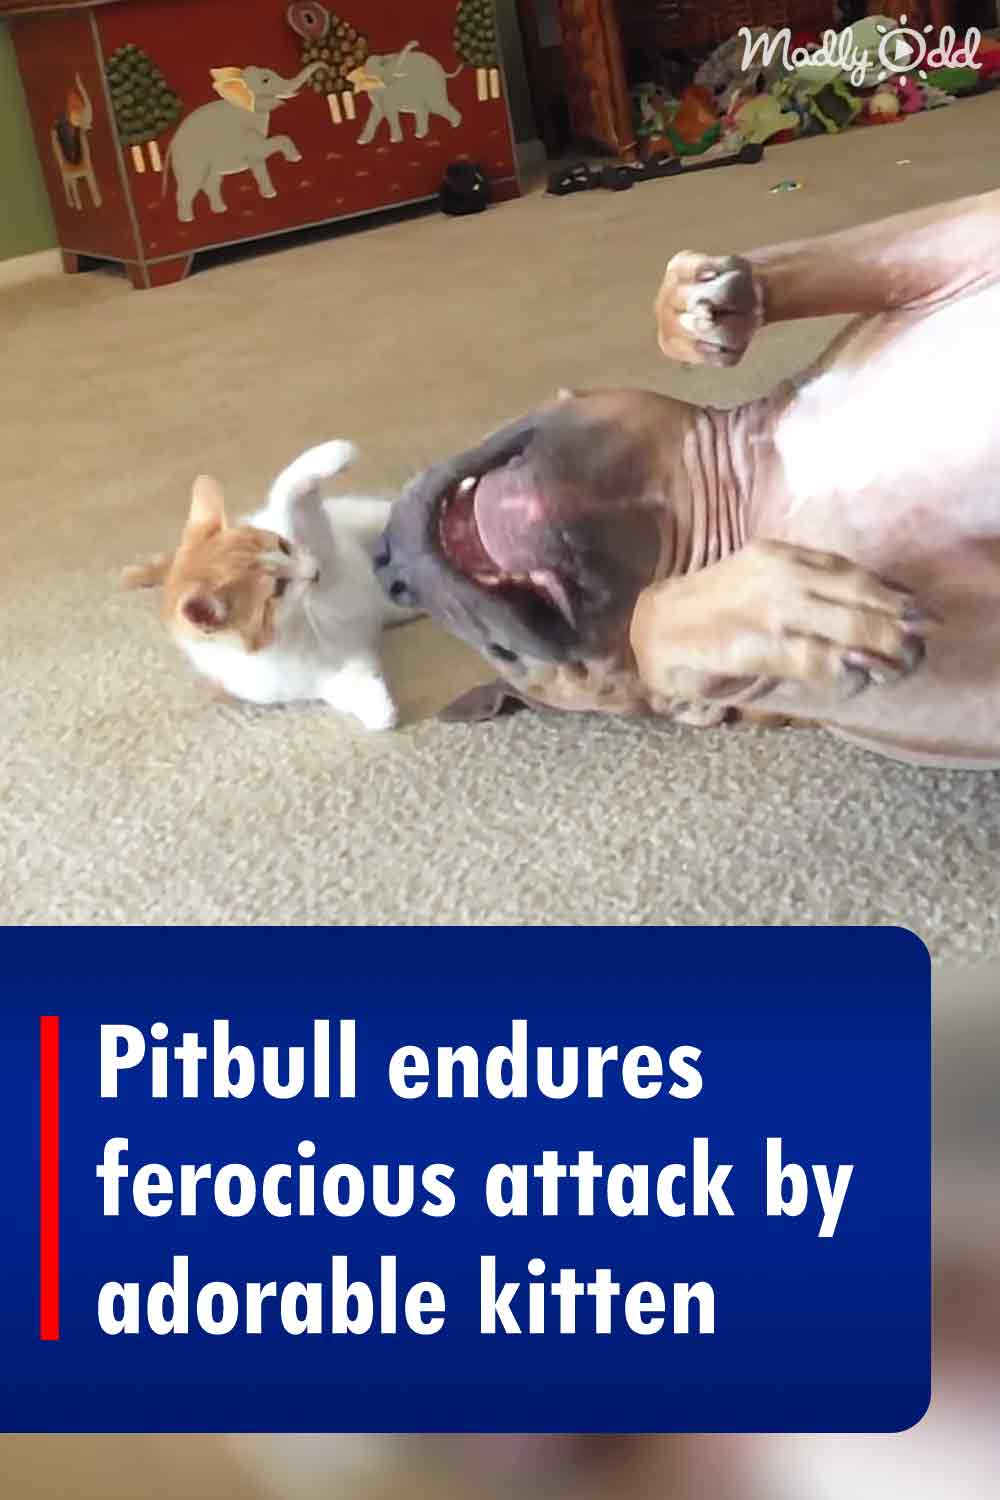 Pitbull endures ferocious attack by adorable kitten